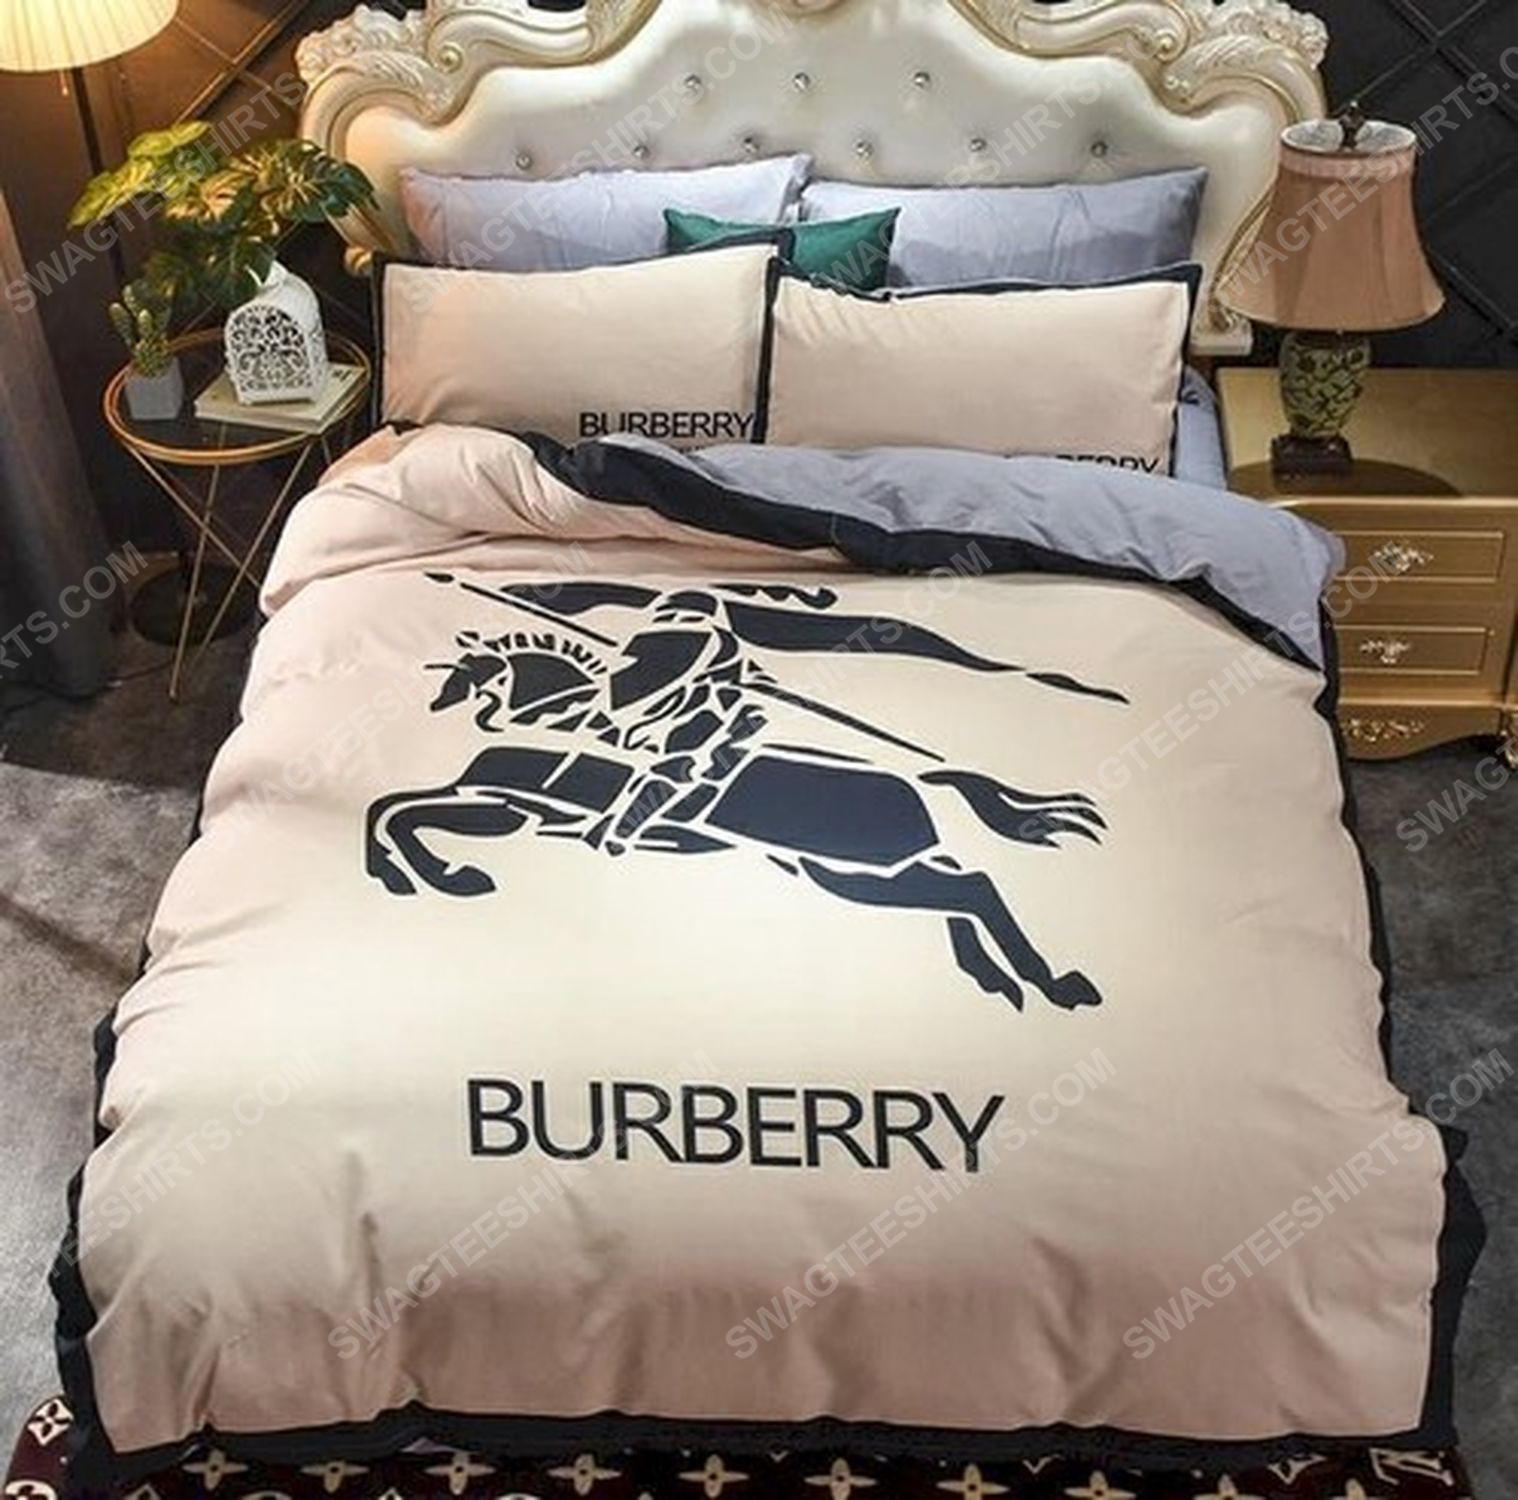 Burberry symbol full print duvet cover bedding set 2 - Copy